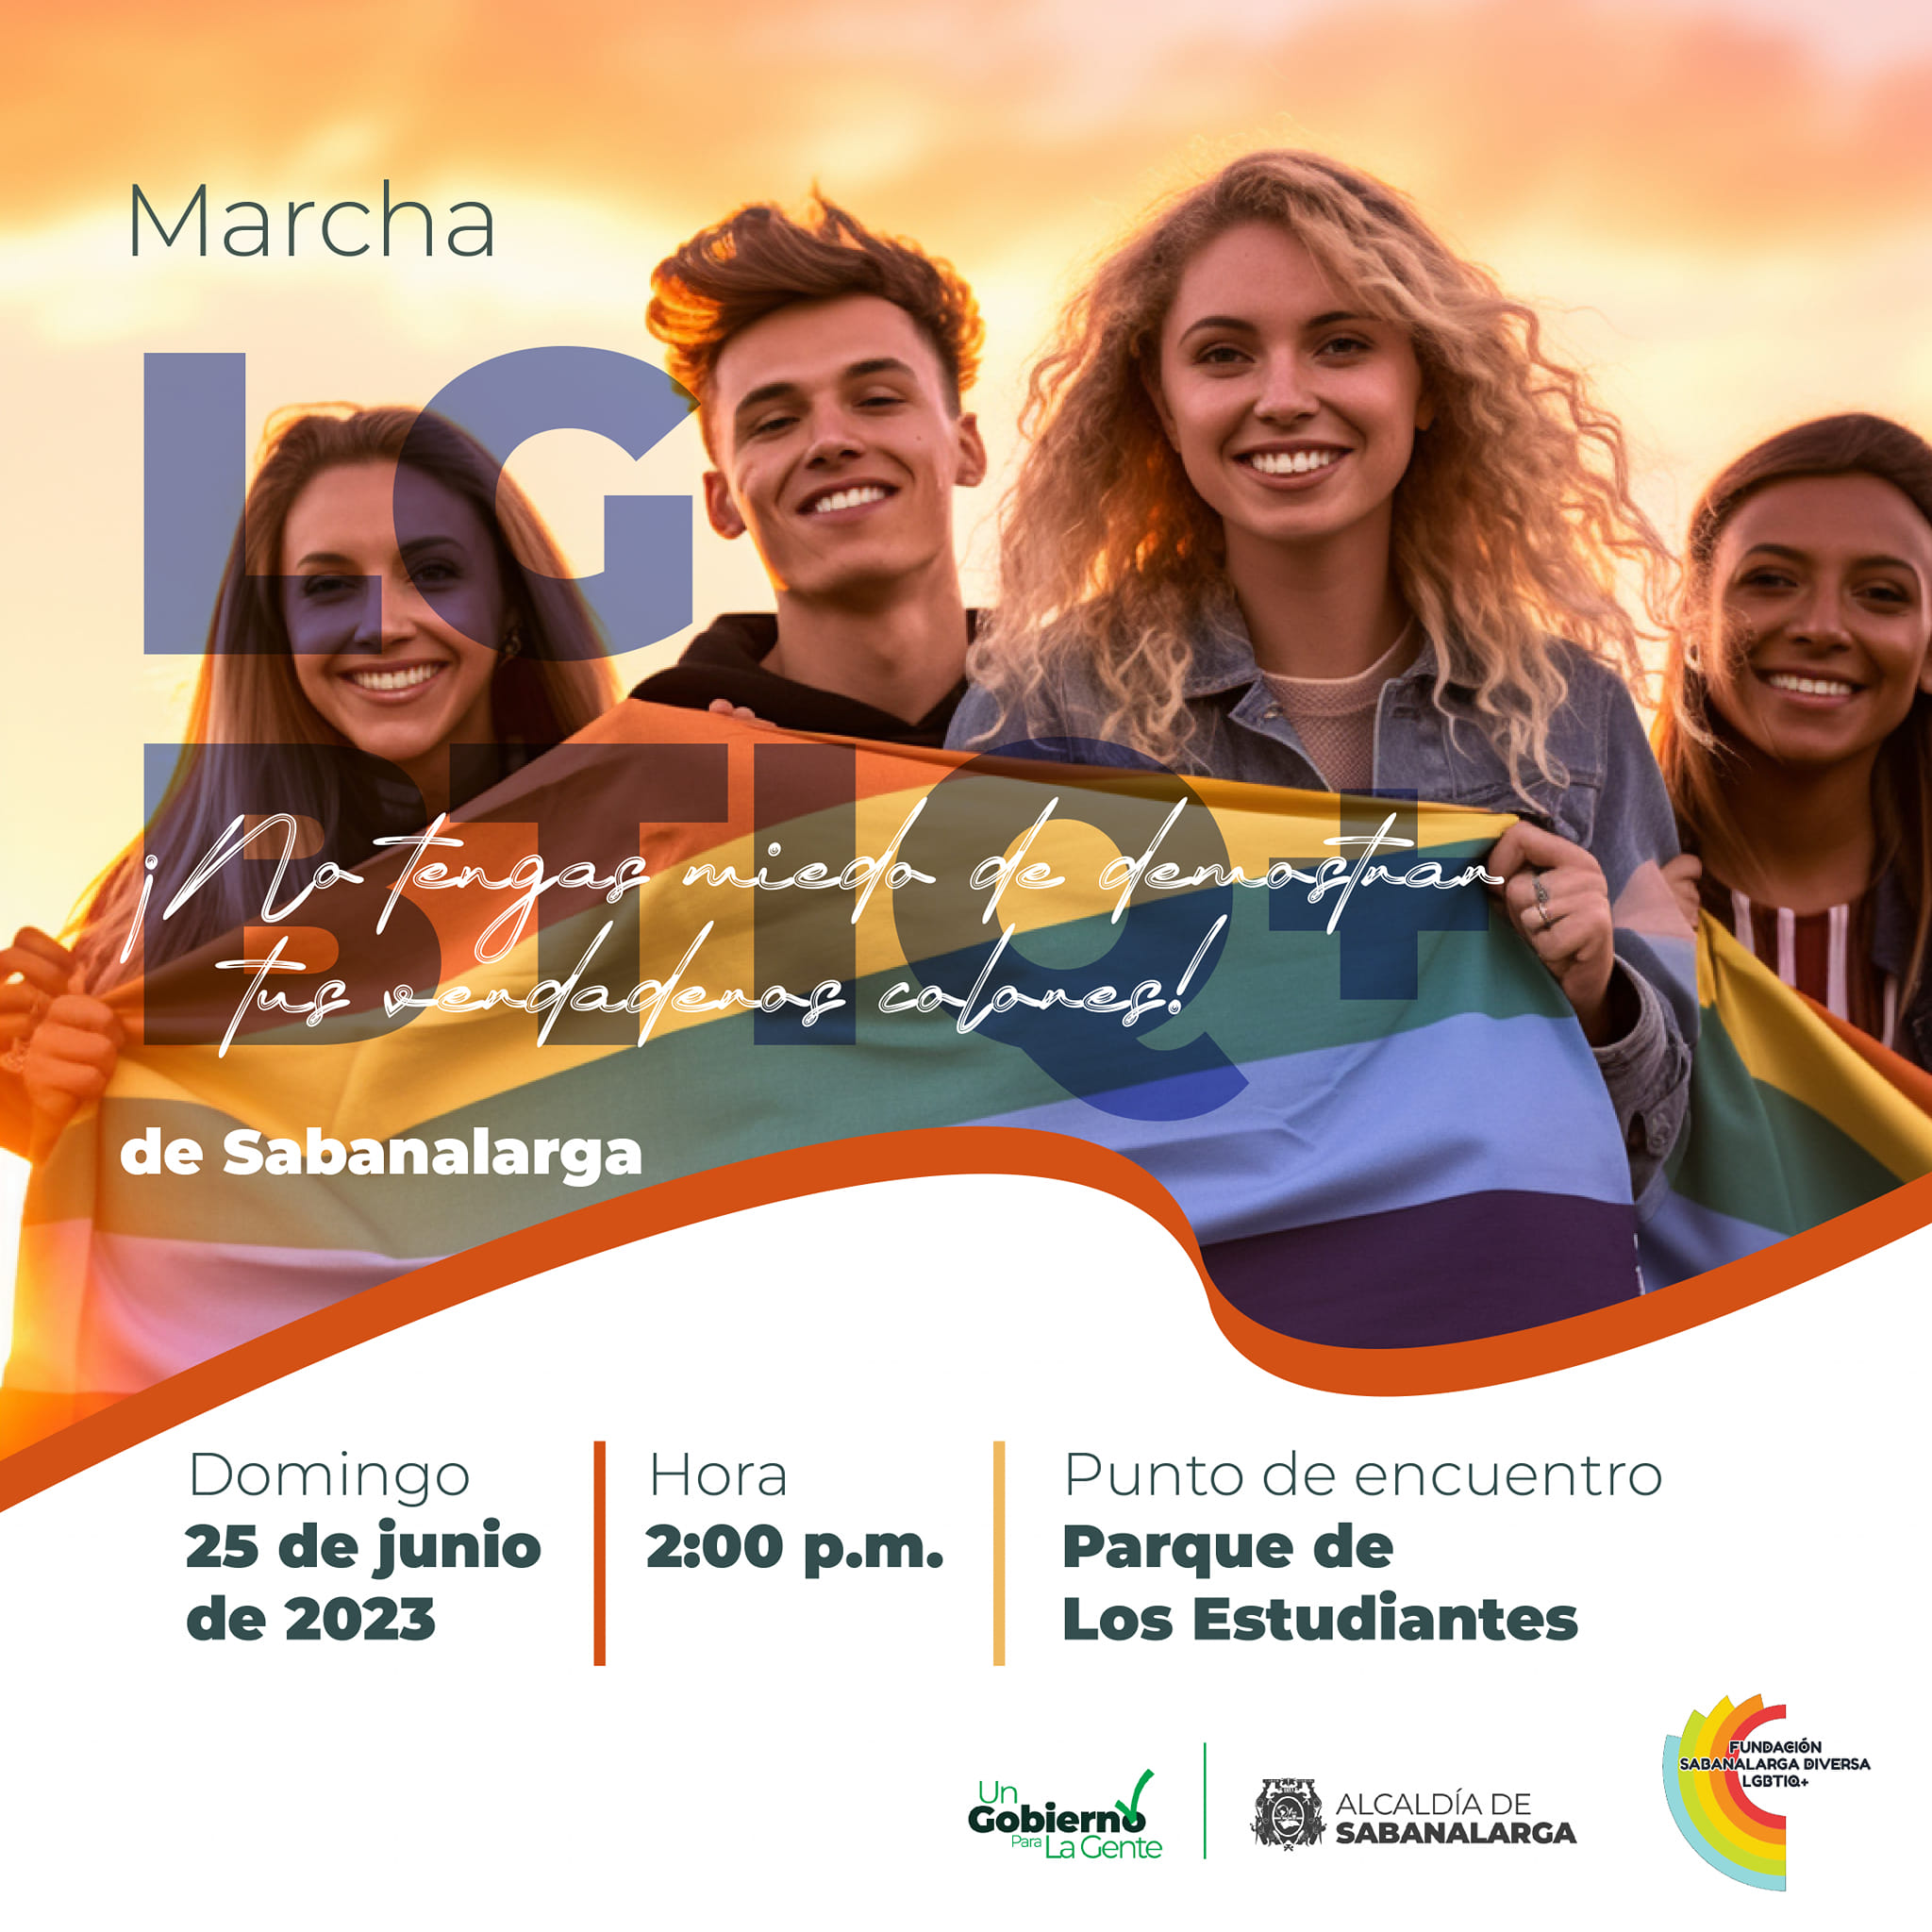 Marcha LGBTIQ+ de Sabanalarga 2023